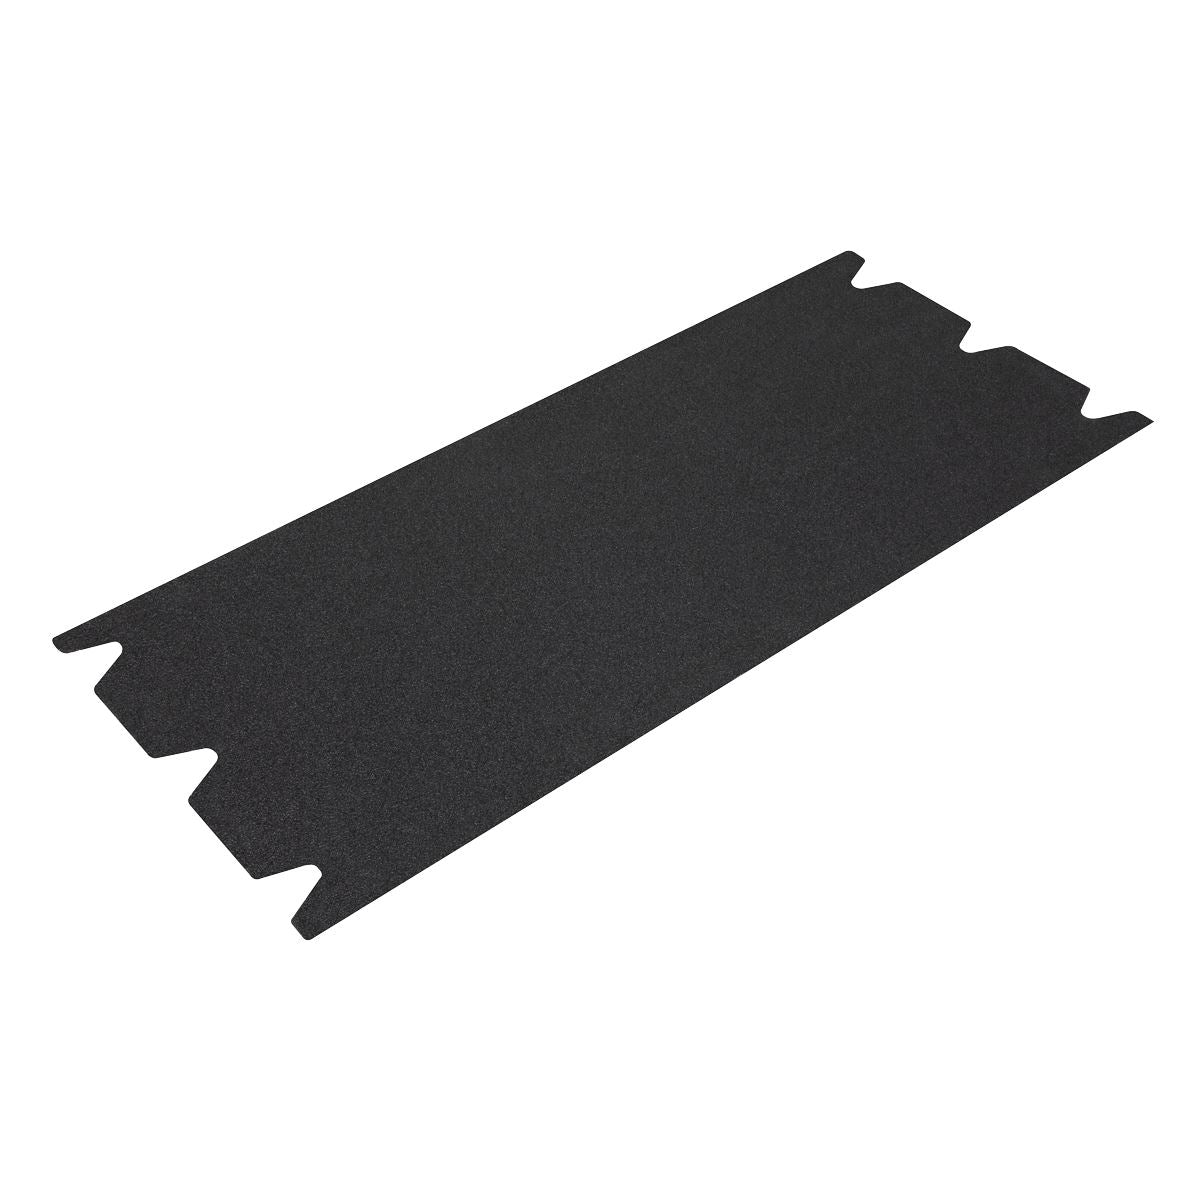 Sealey Floor Sanding Sheet 203 x 495mm 24Grit - Pack of 25